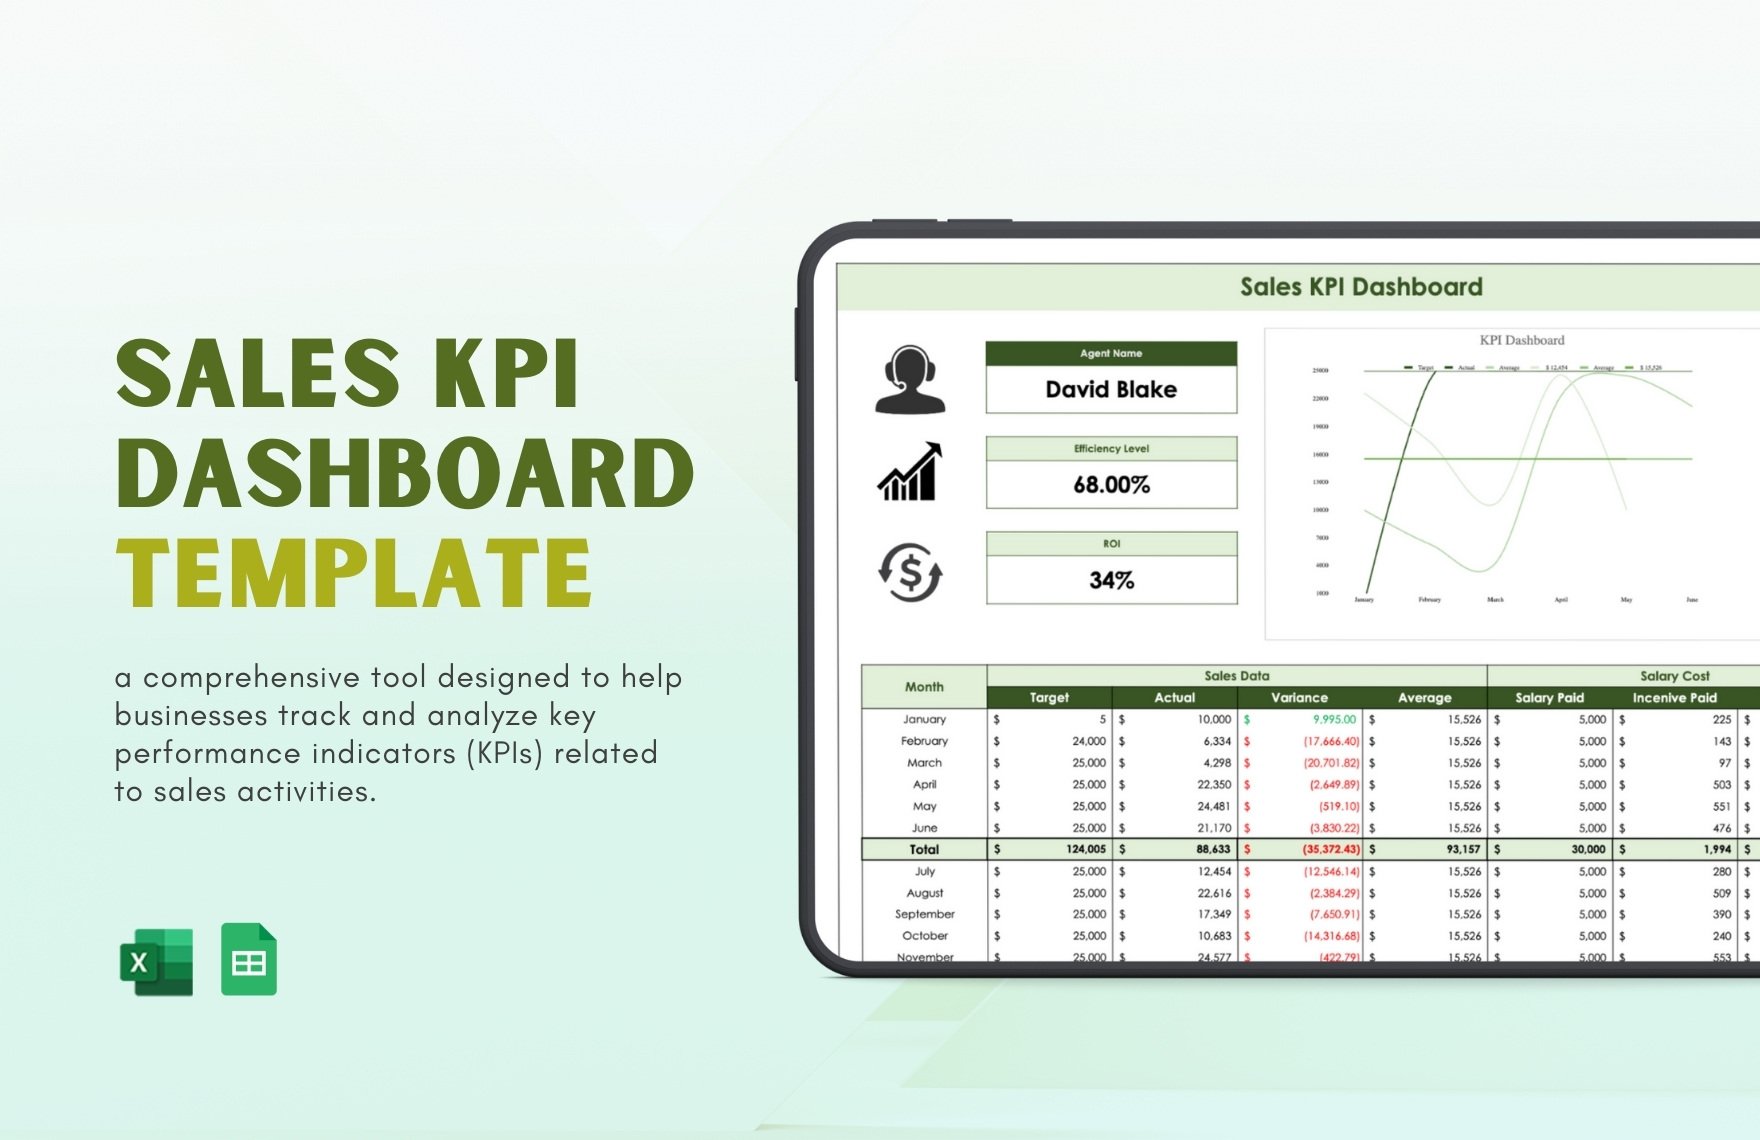 Sales KPI Dashboard Template